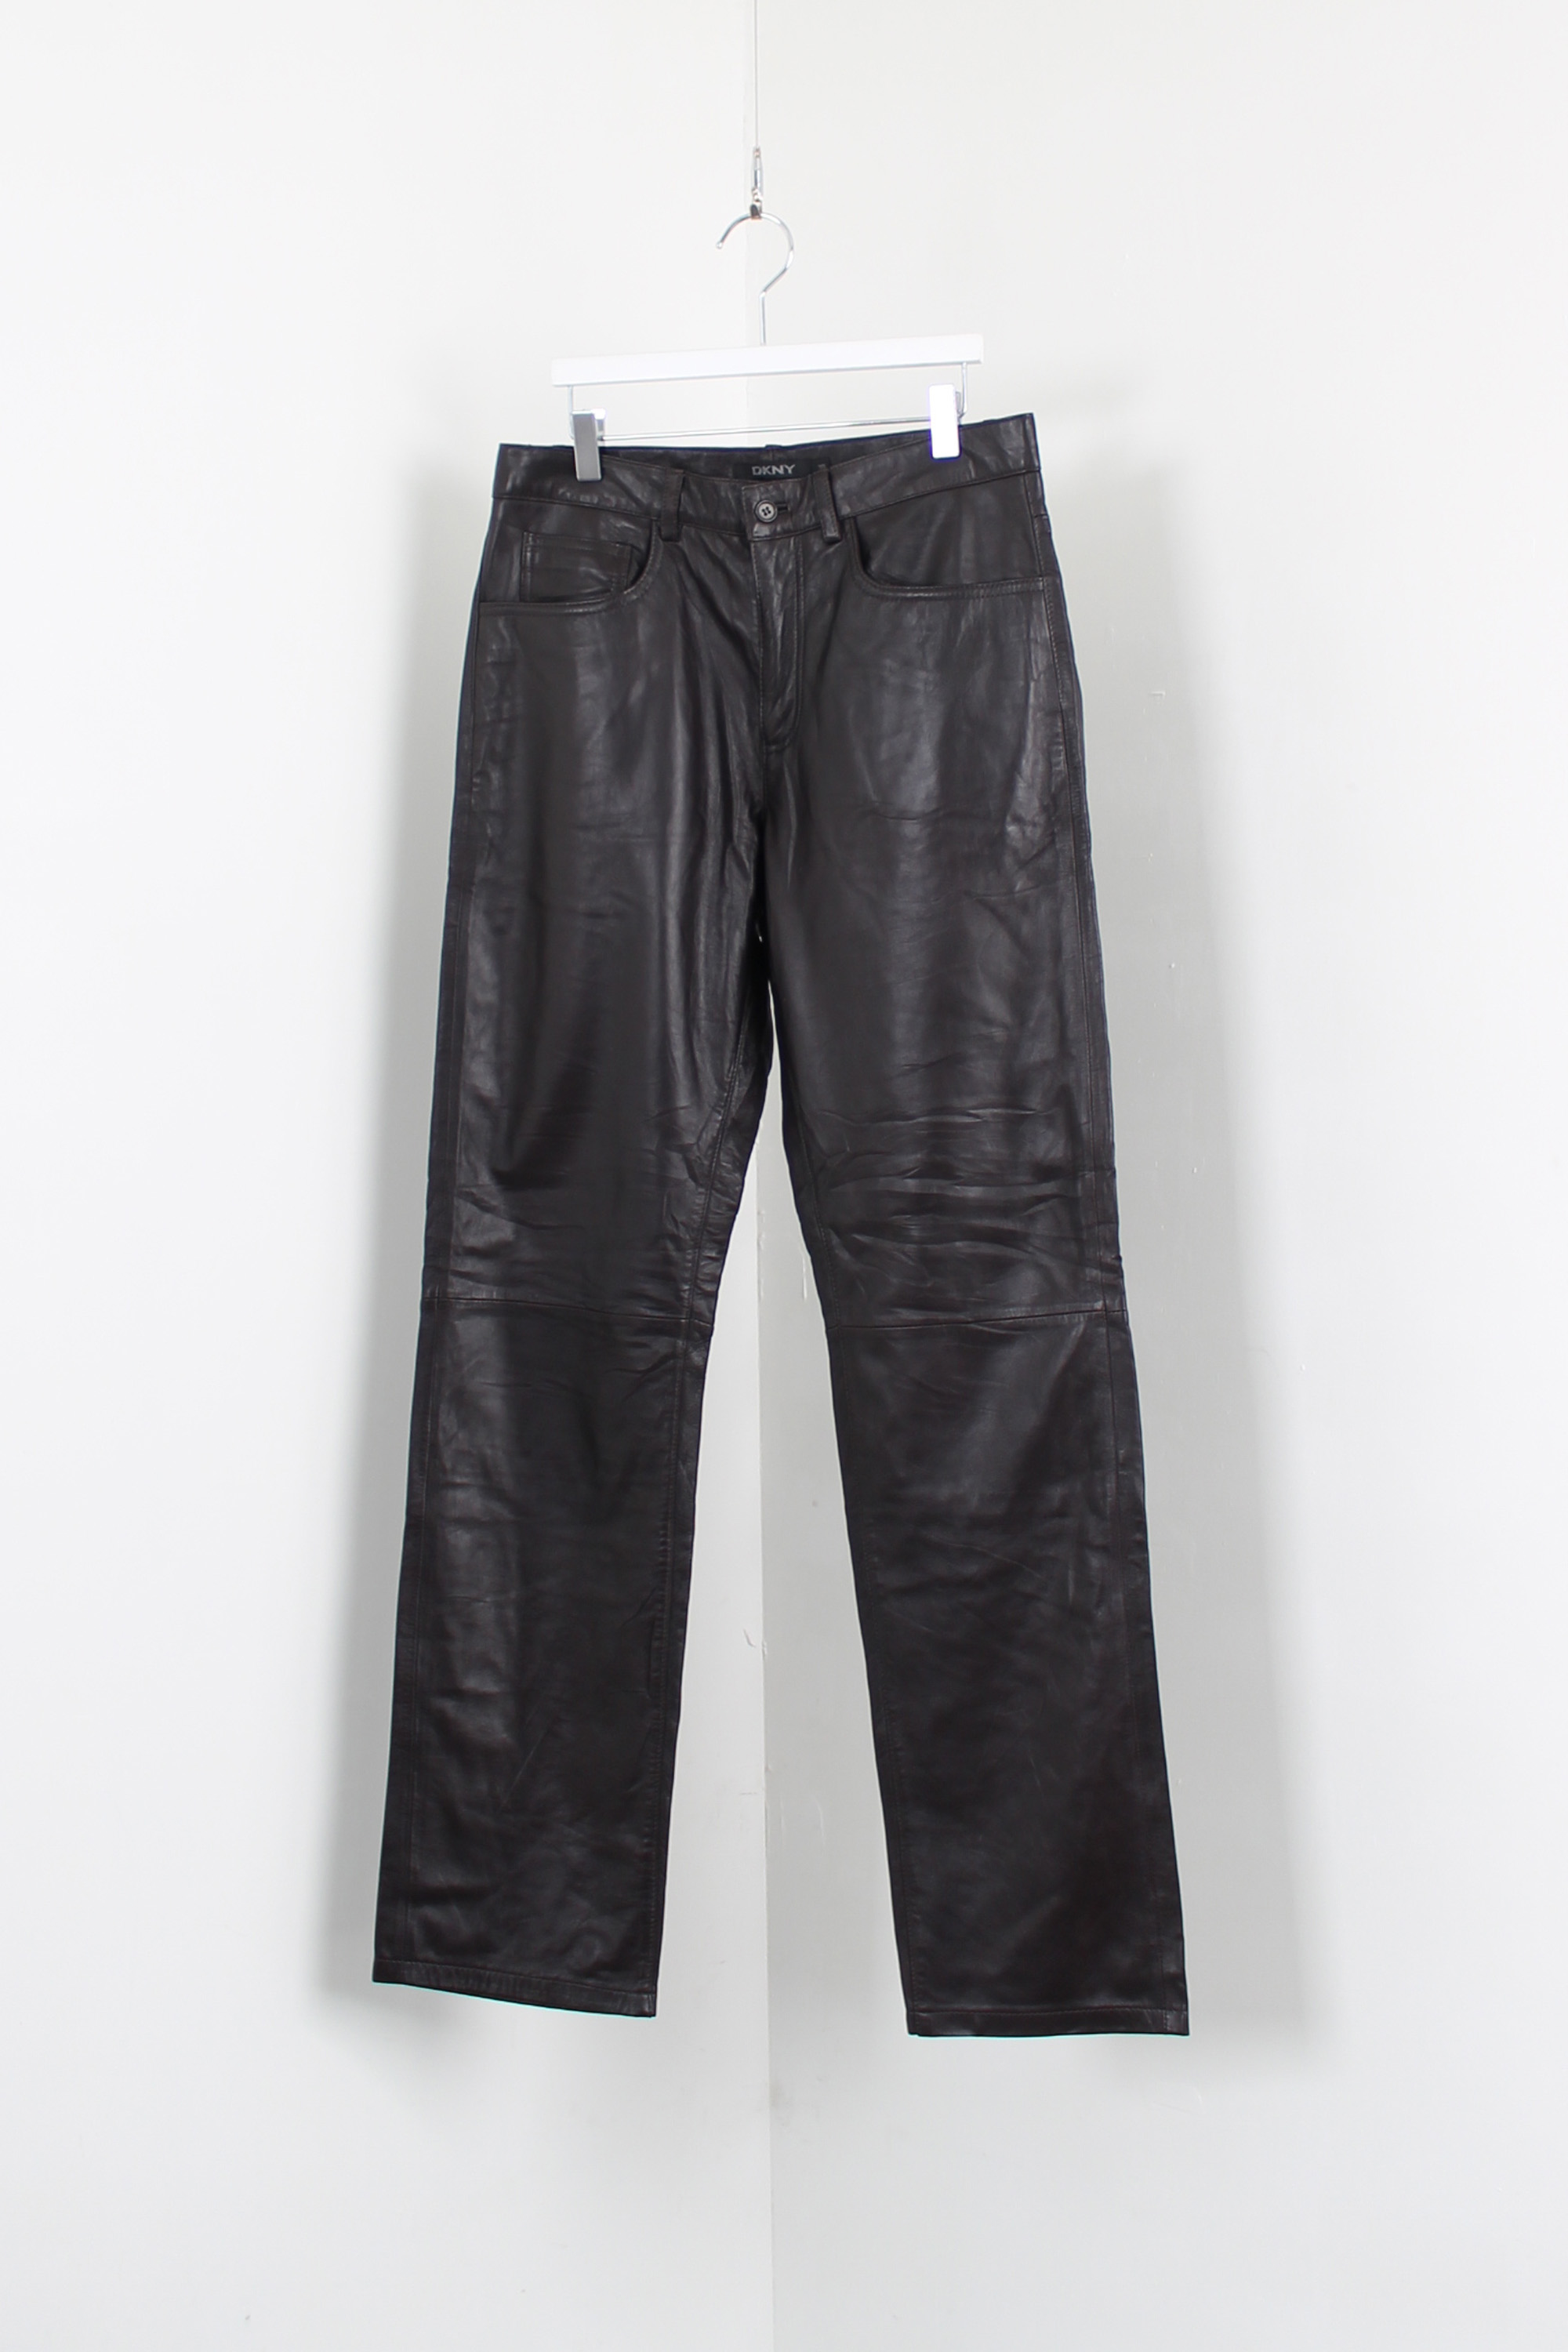 DKNY leather pants